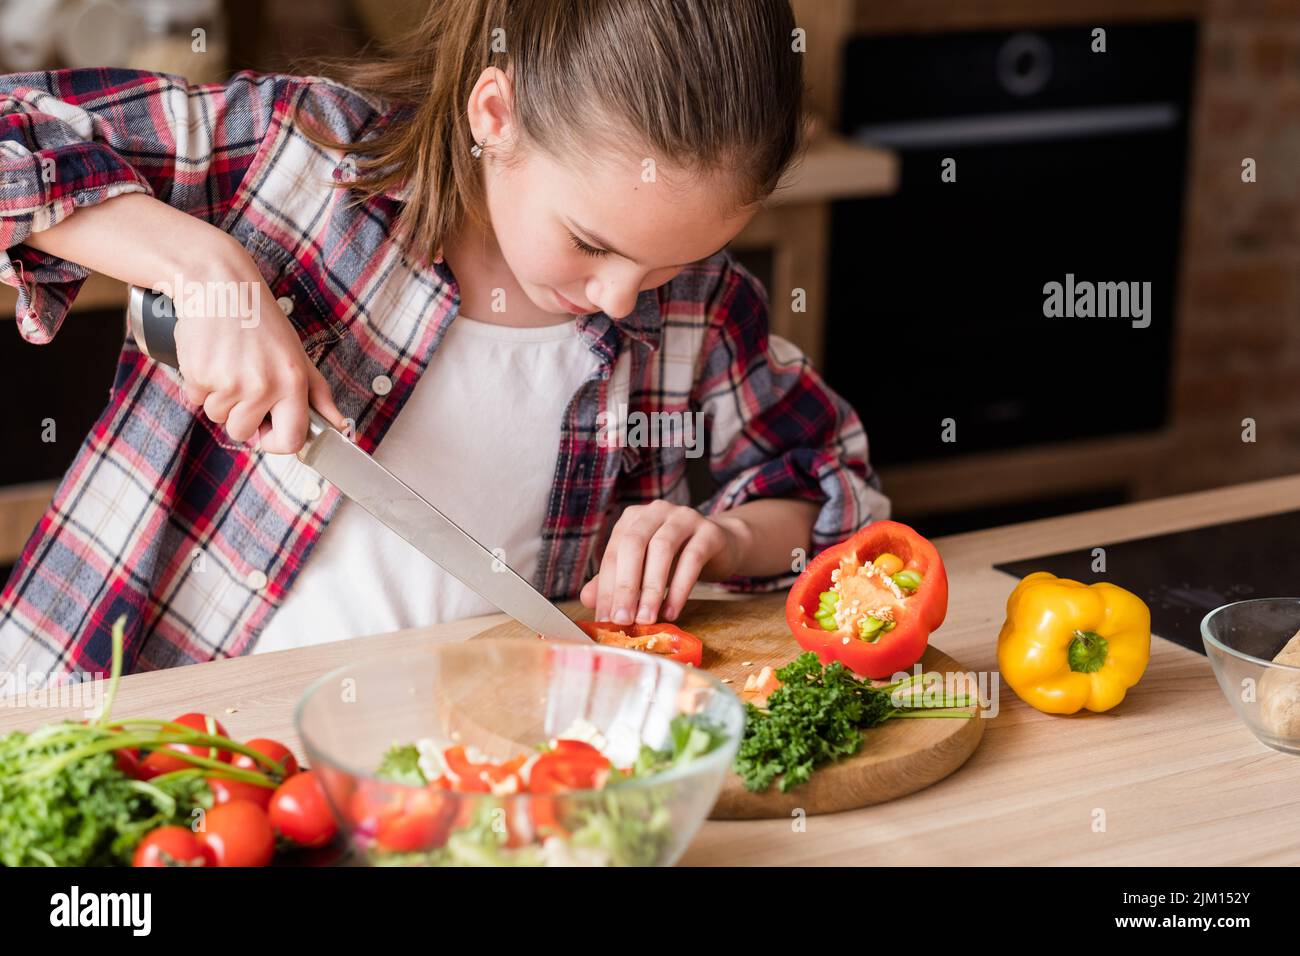 fille coupe vegie cuisiner ingrédients du dîner aliments sains Banque D'Images